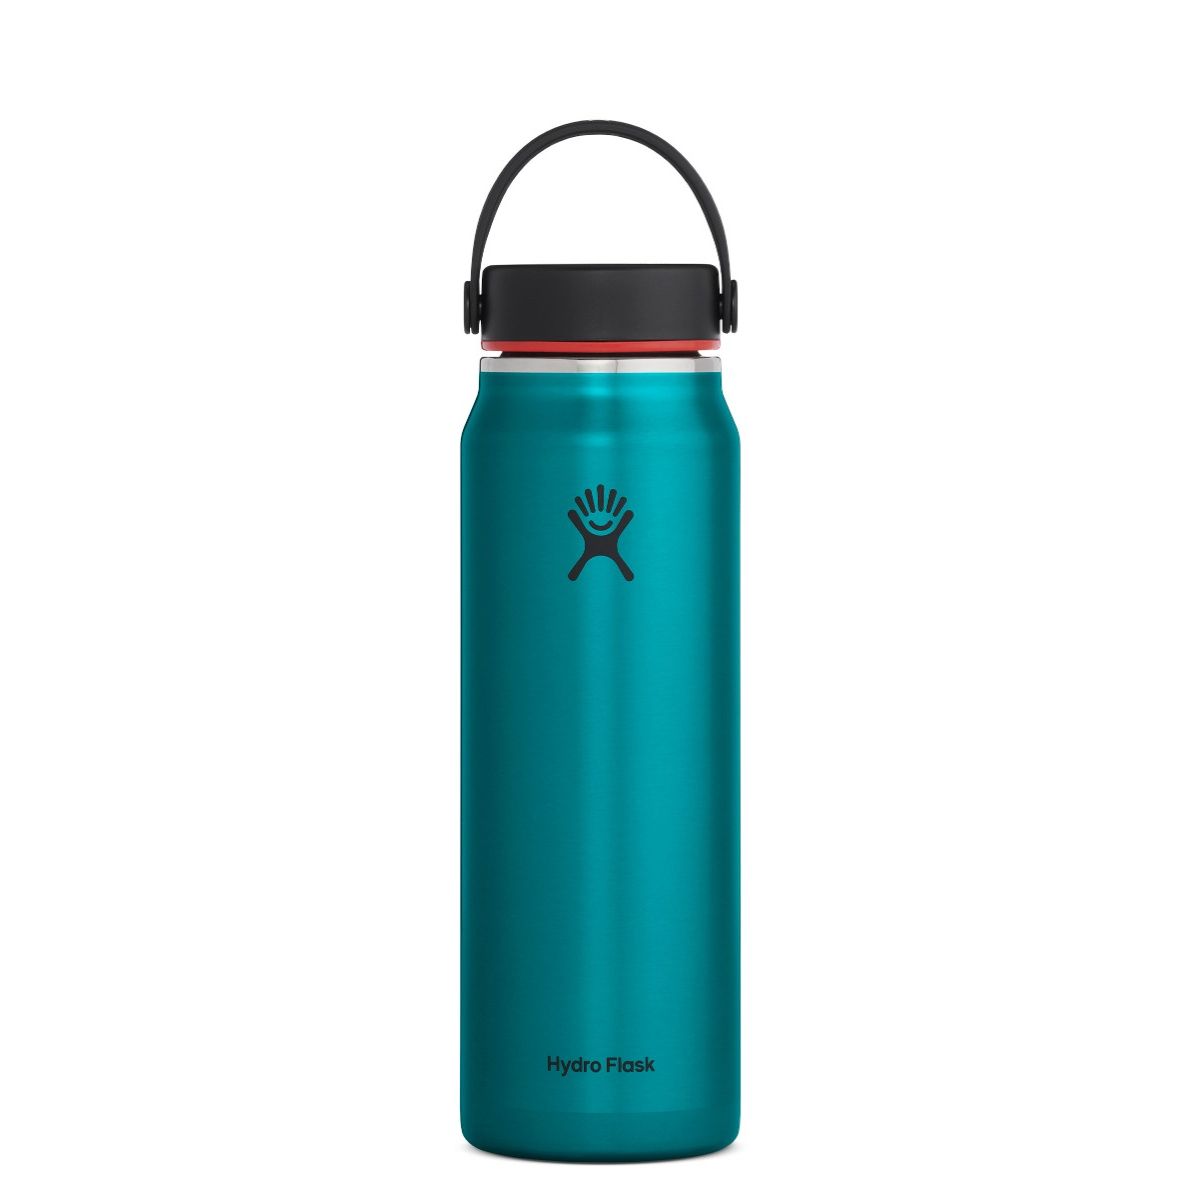 Hydro Flask - Trail Series Wide Mouth Lightweight 0.95l/32oz - Stainless Steel BPA-Free - Weekendbee - sustainable sportswear